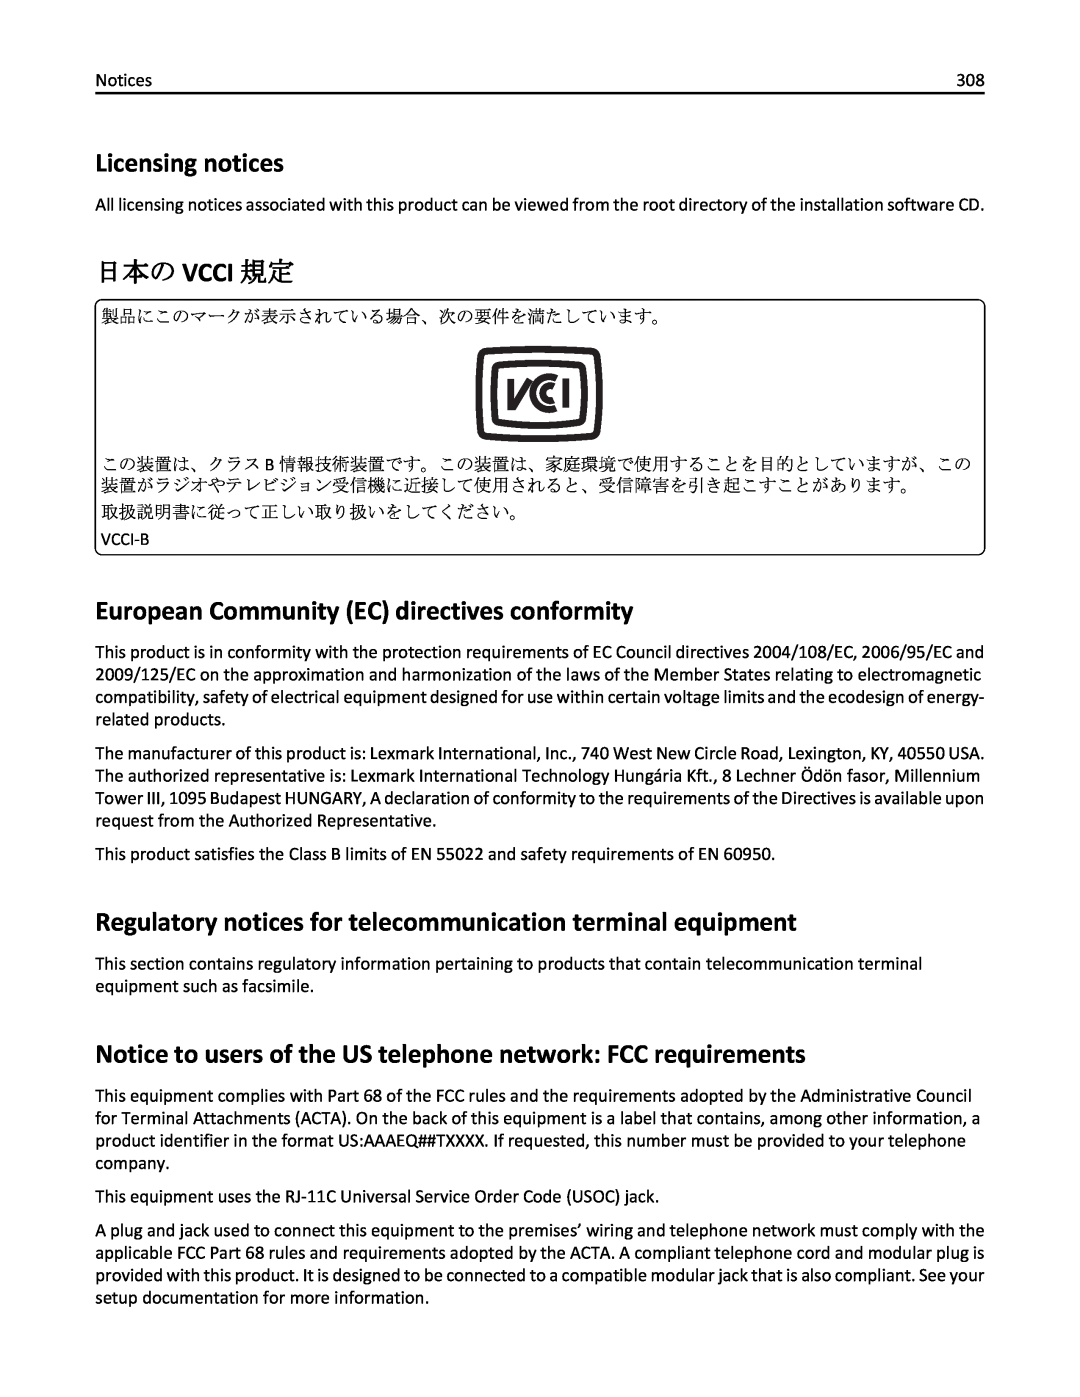 Lexmark 470, 35S5701, 670, 675, MX510, MX410 manual Licensing notices, European Community EC directives conformity, 日本の Vcci 規定 